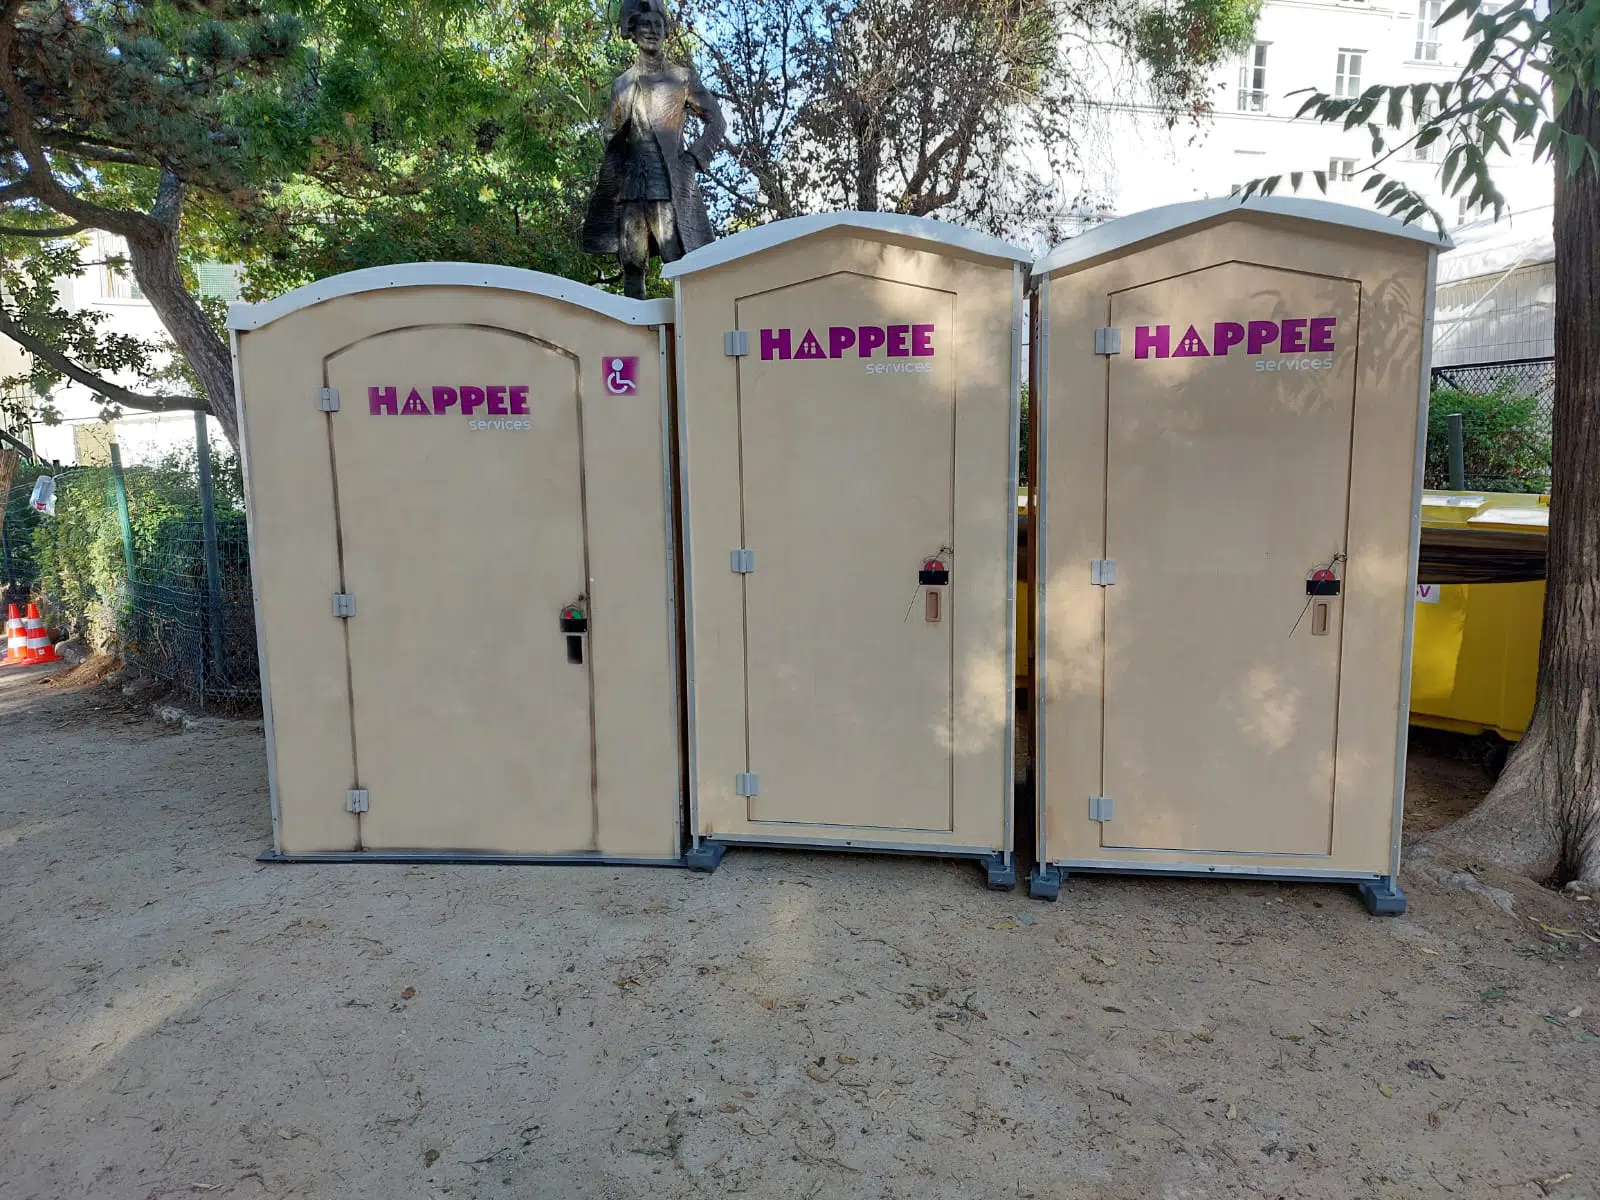 Toilettes sèches bois